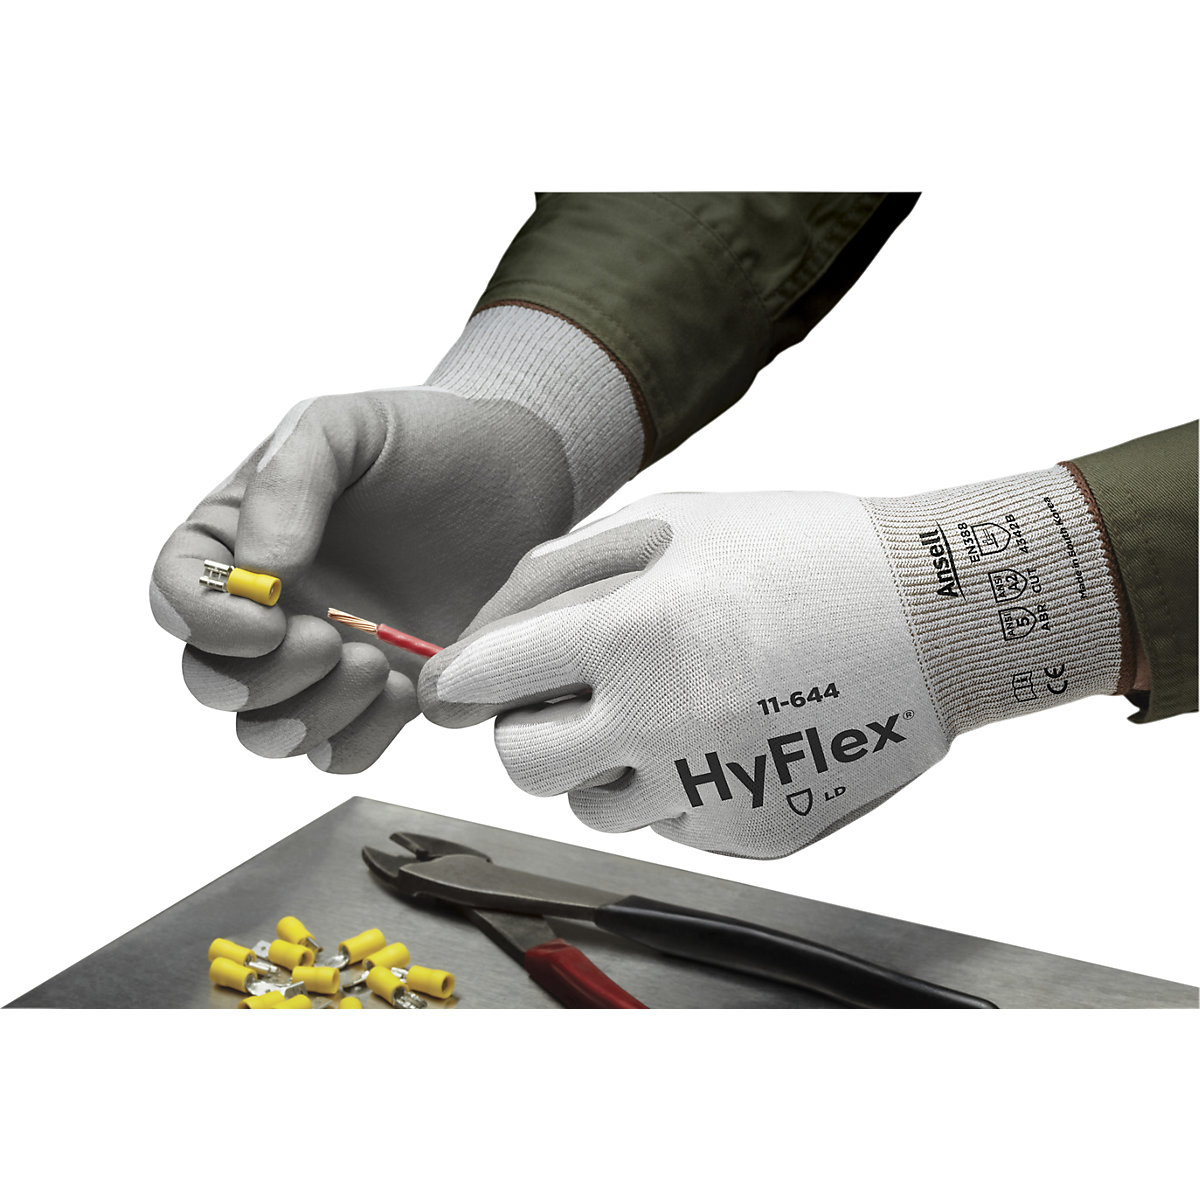 Delovne rokavice HyFlex® 11-644 – Ansell (Slika izdelka 11)-10